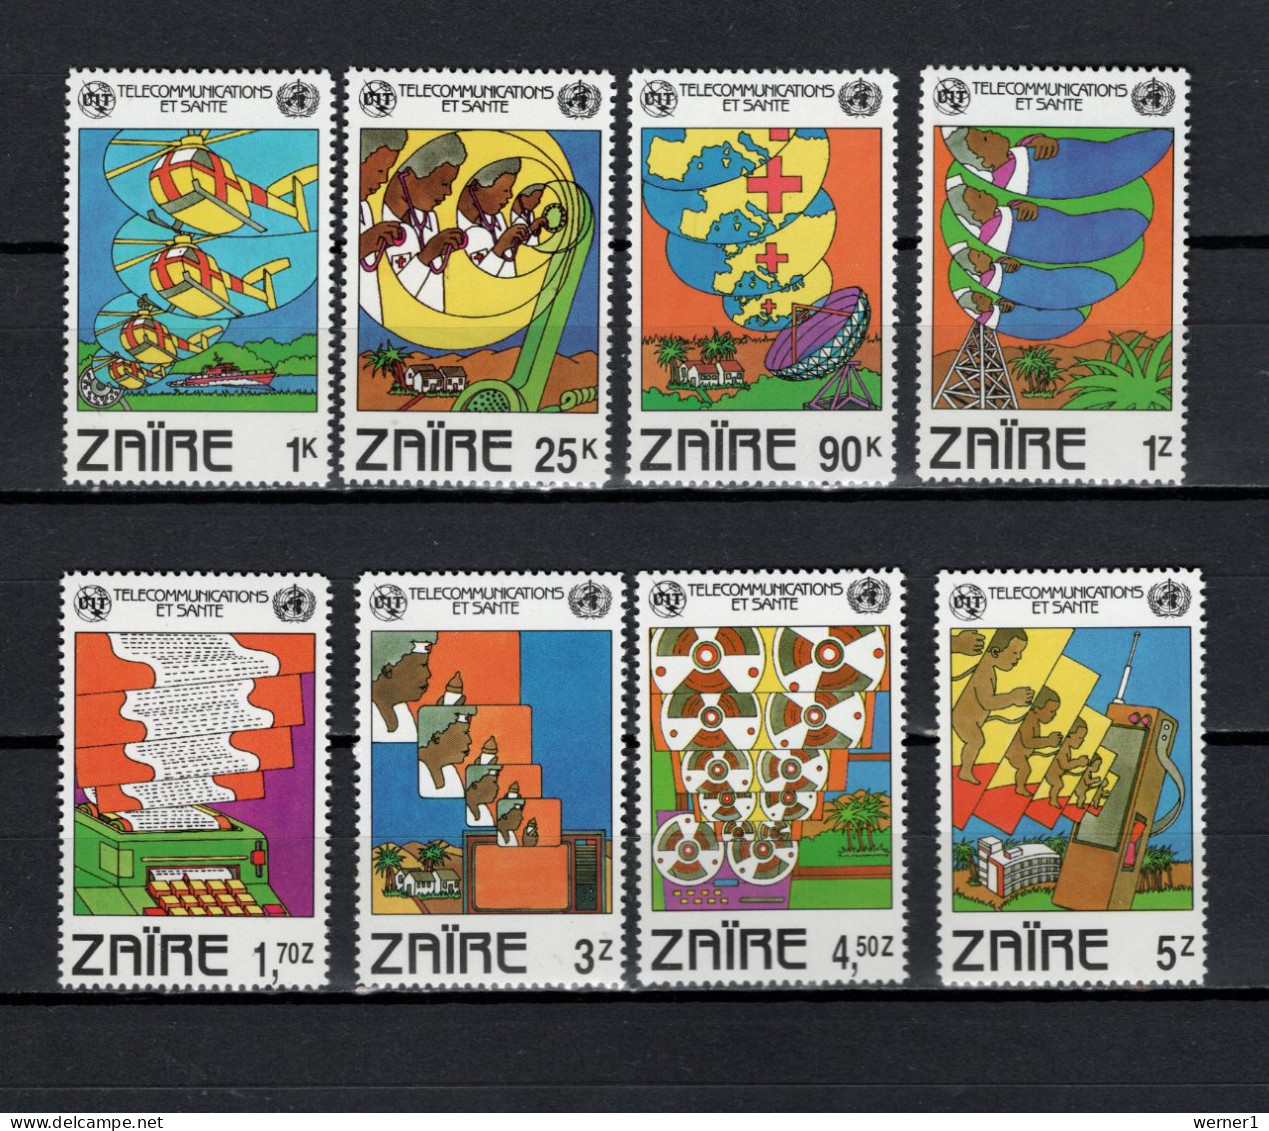 Congo - Zaire 1982 Space, Telecommunication Set Of 8 MNH - Africa